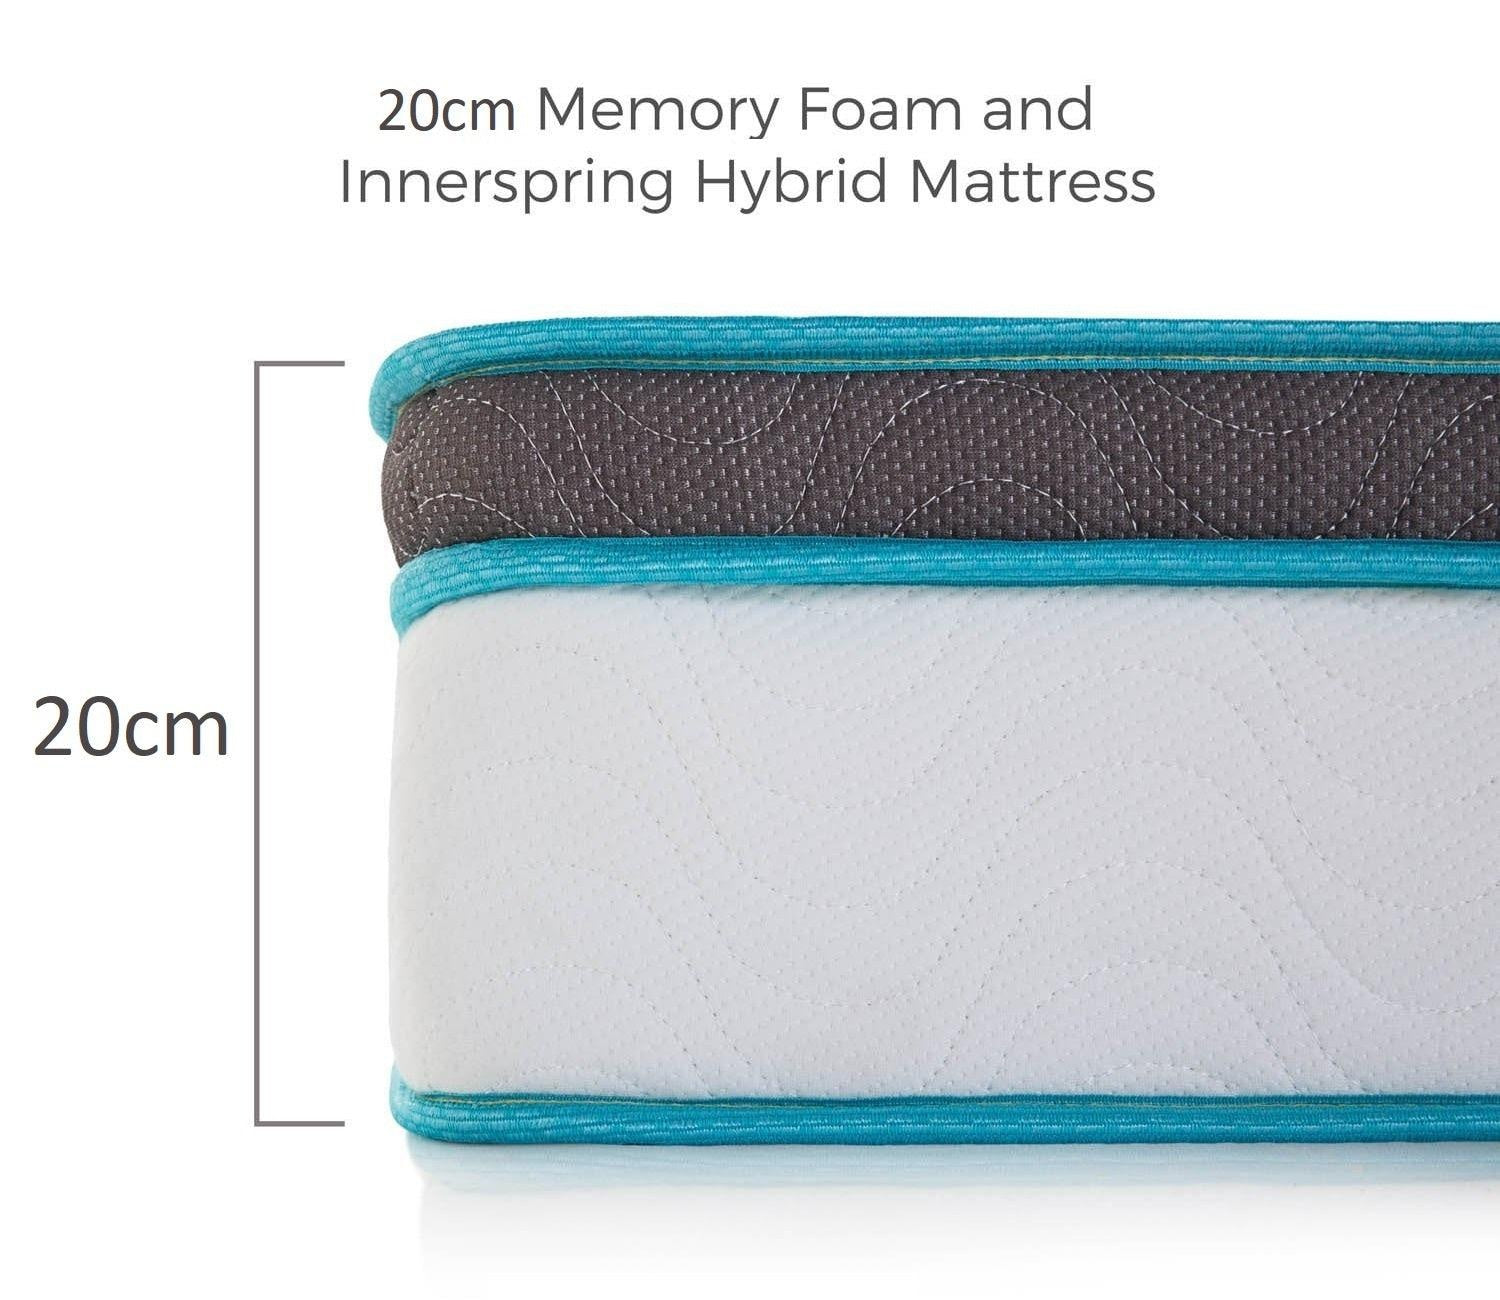 Palermo King 20cm Memory Foam and Innerspring Hybrid Mattress Deals499